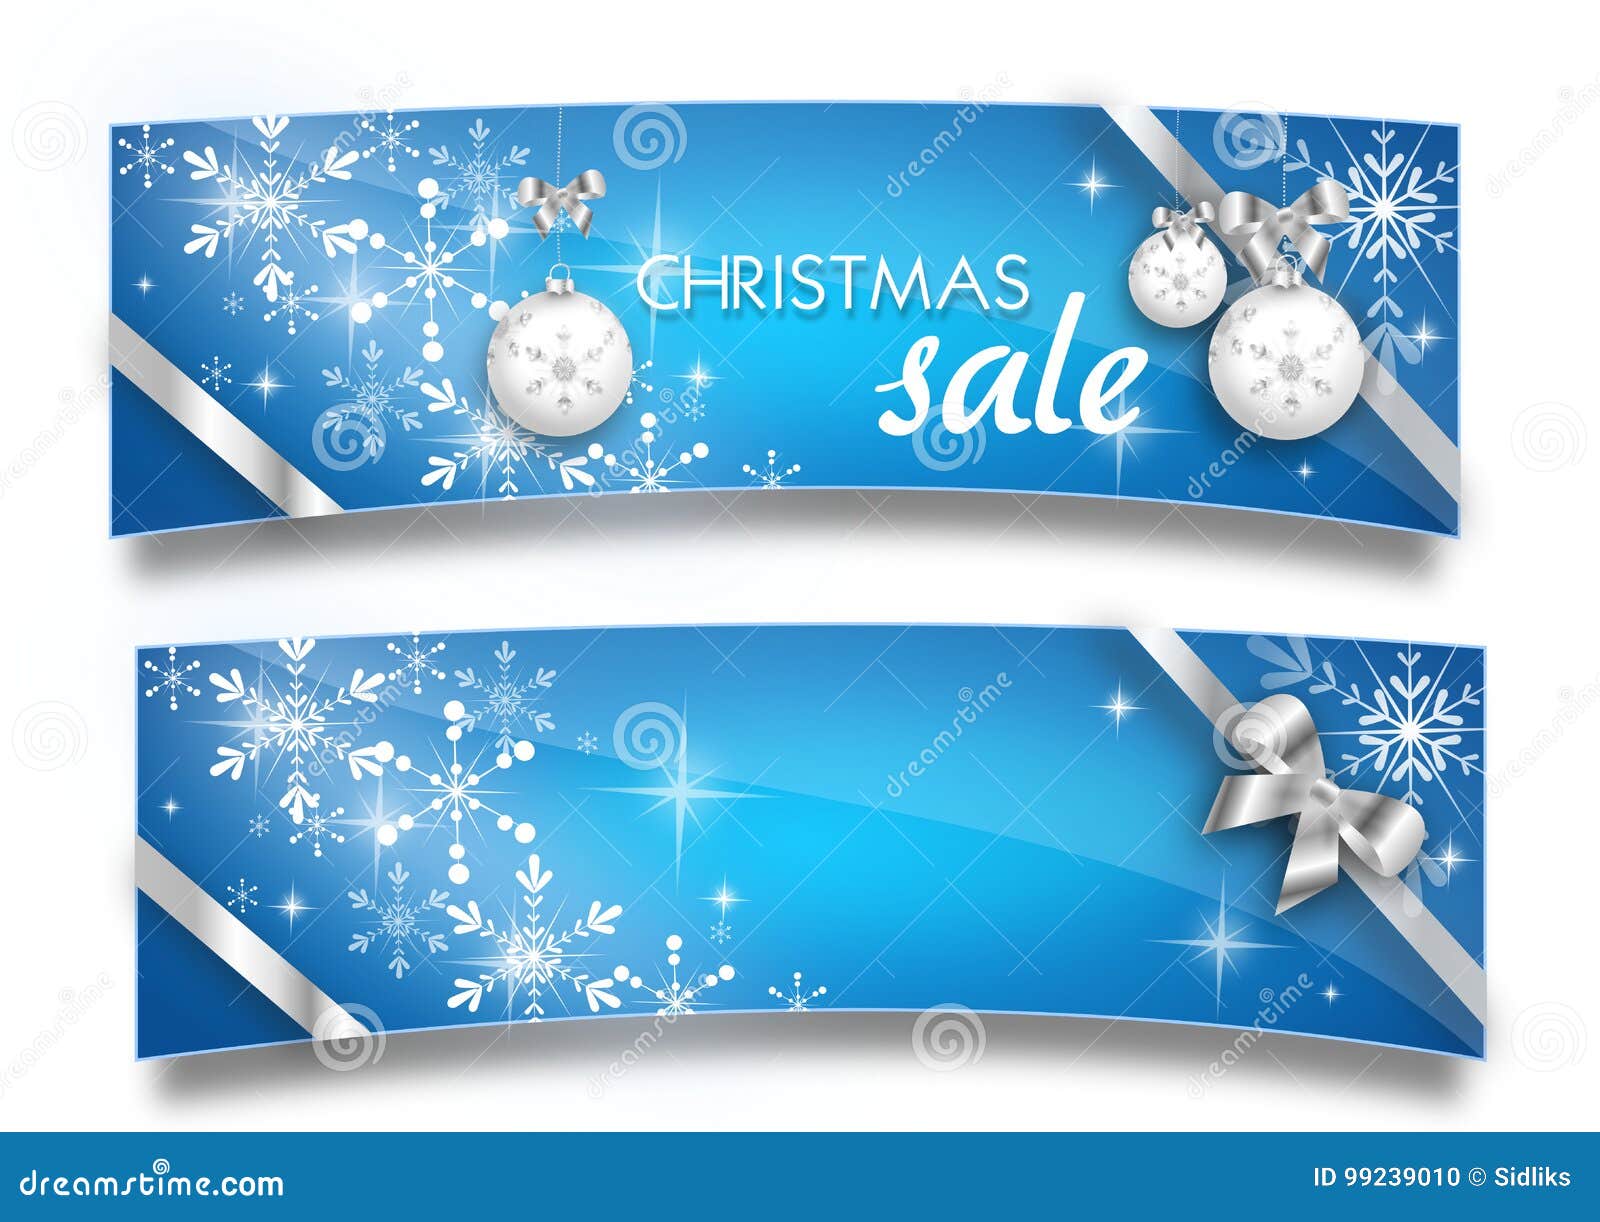 Christmas banners set stock illustration. Illustration of silver - 99239010